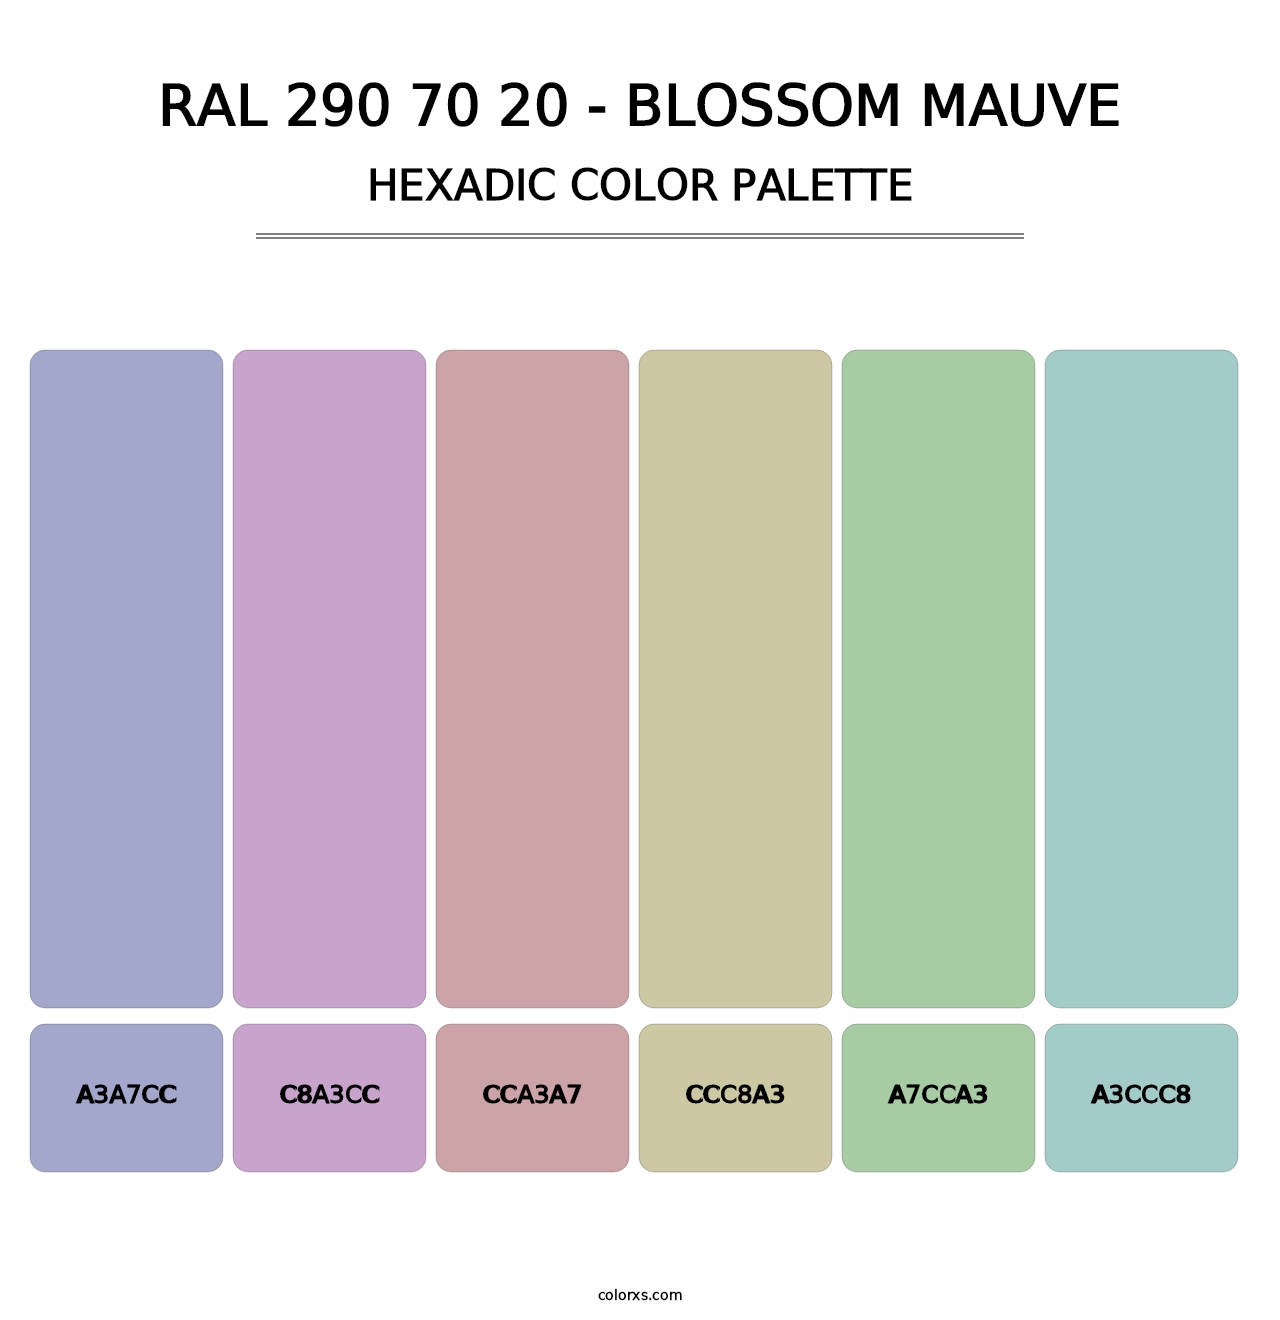 RAL 290 70 20 - Blossom Mauve - Hexadic Color Palette